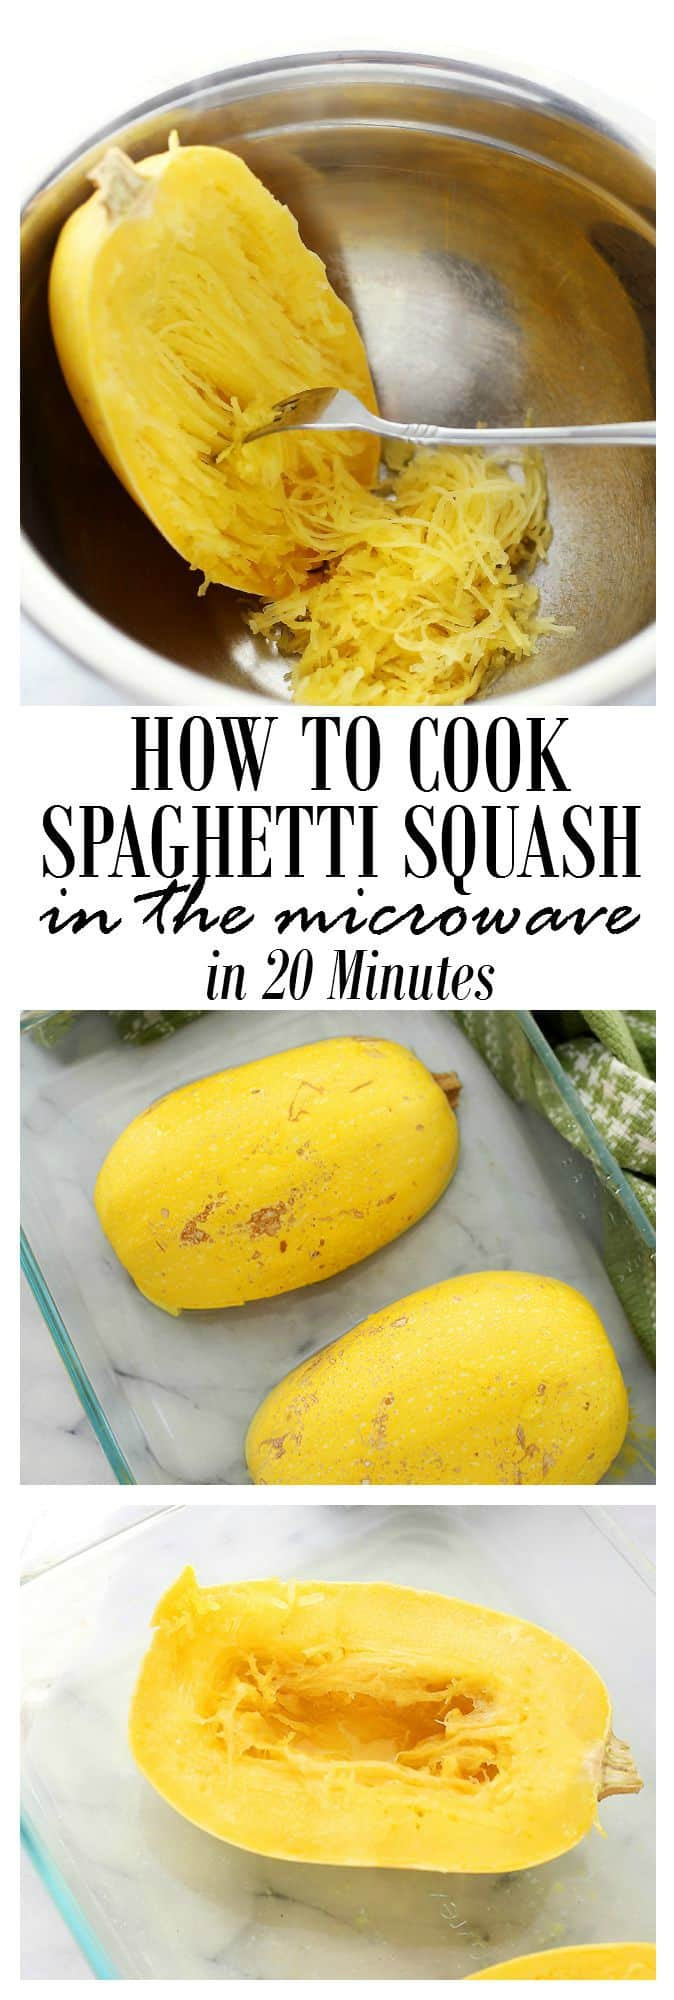 Spaghetti Squash Microwave Recipes
 Mediterranean Spaghetti Squash Boats